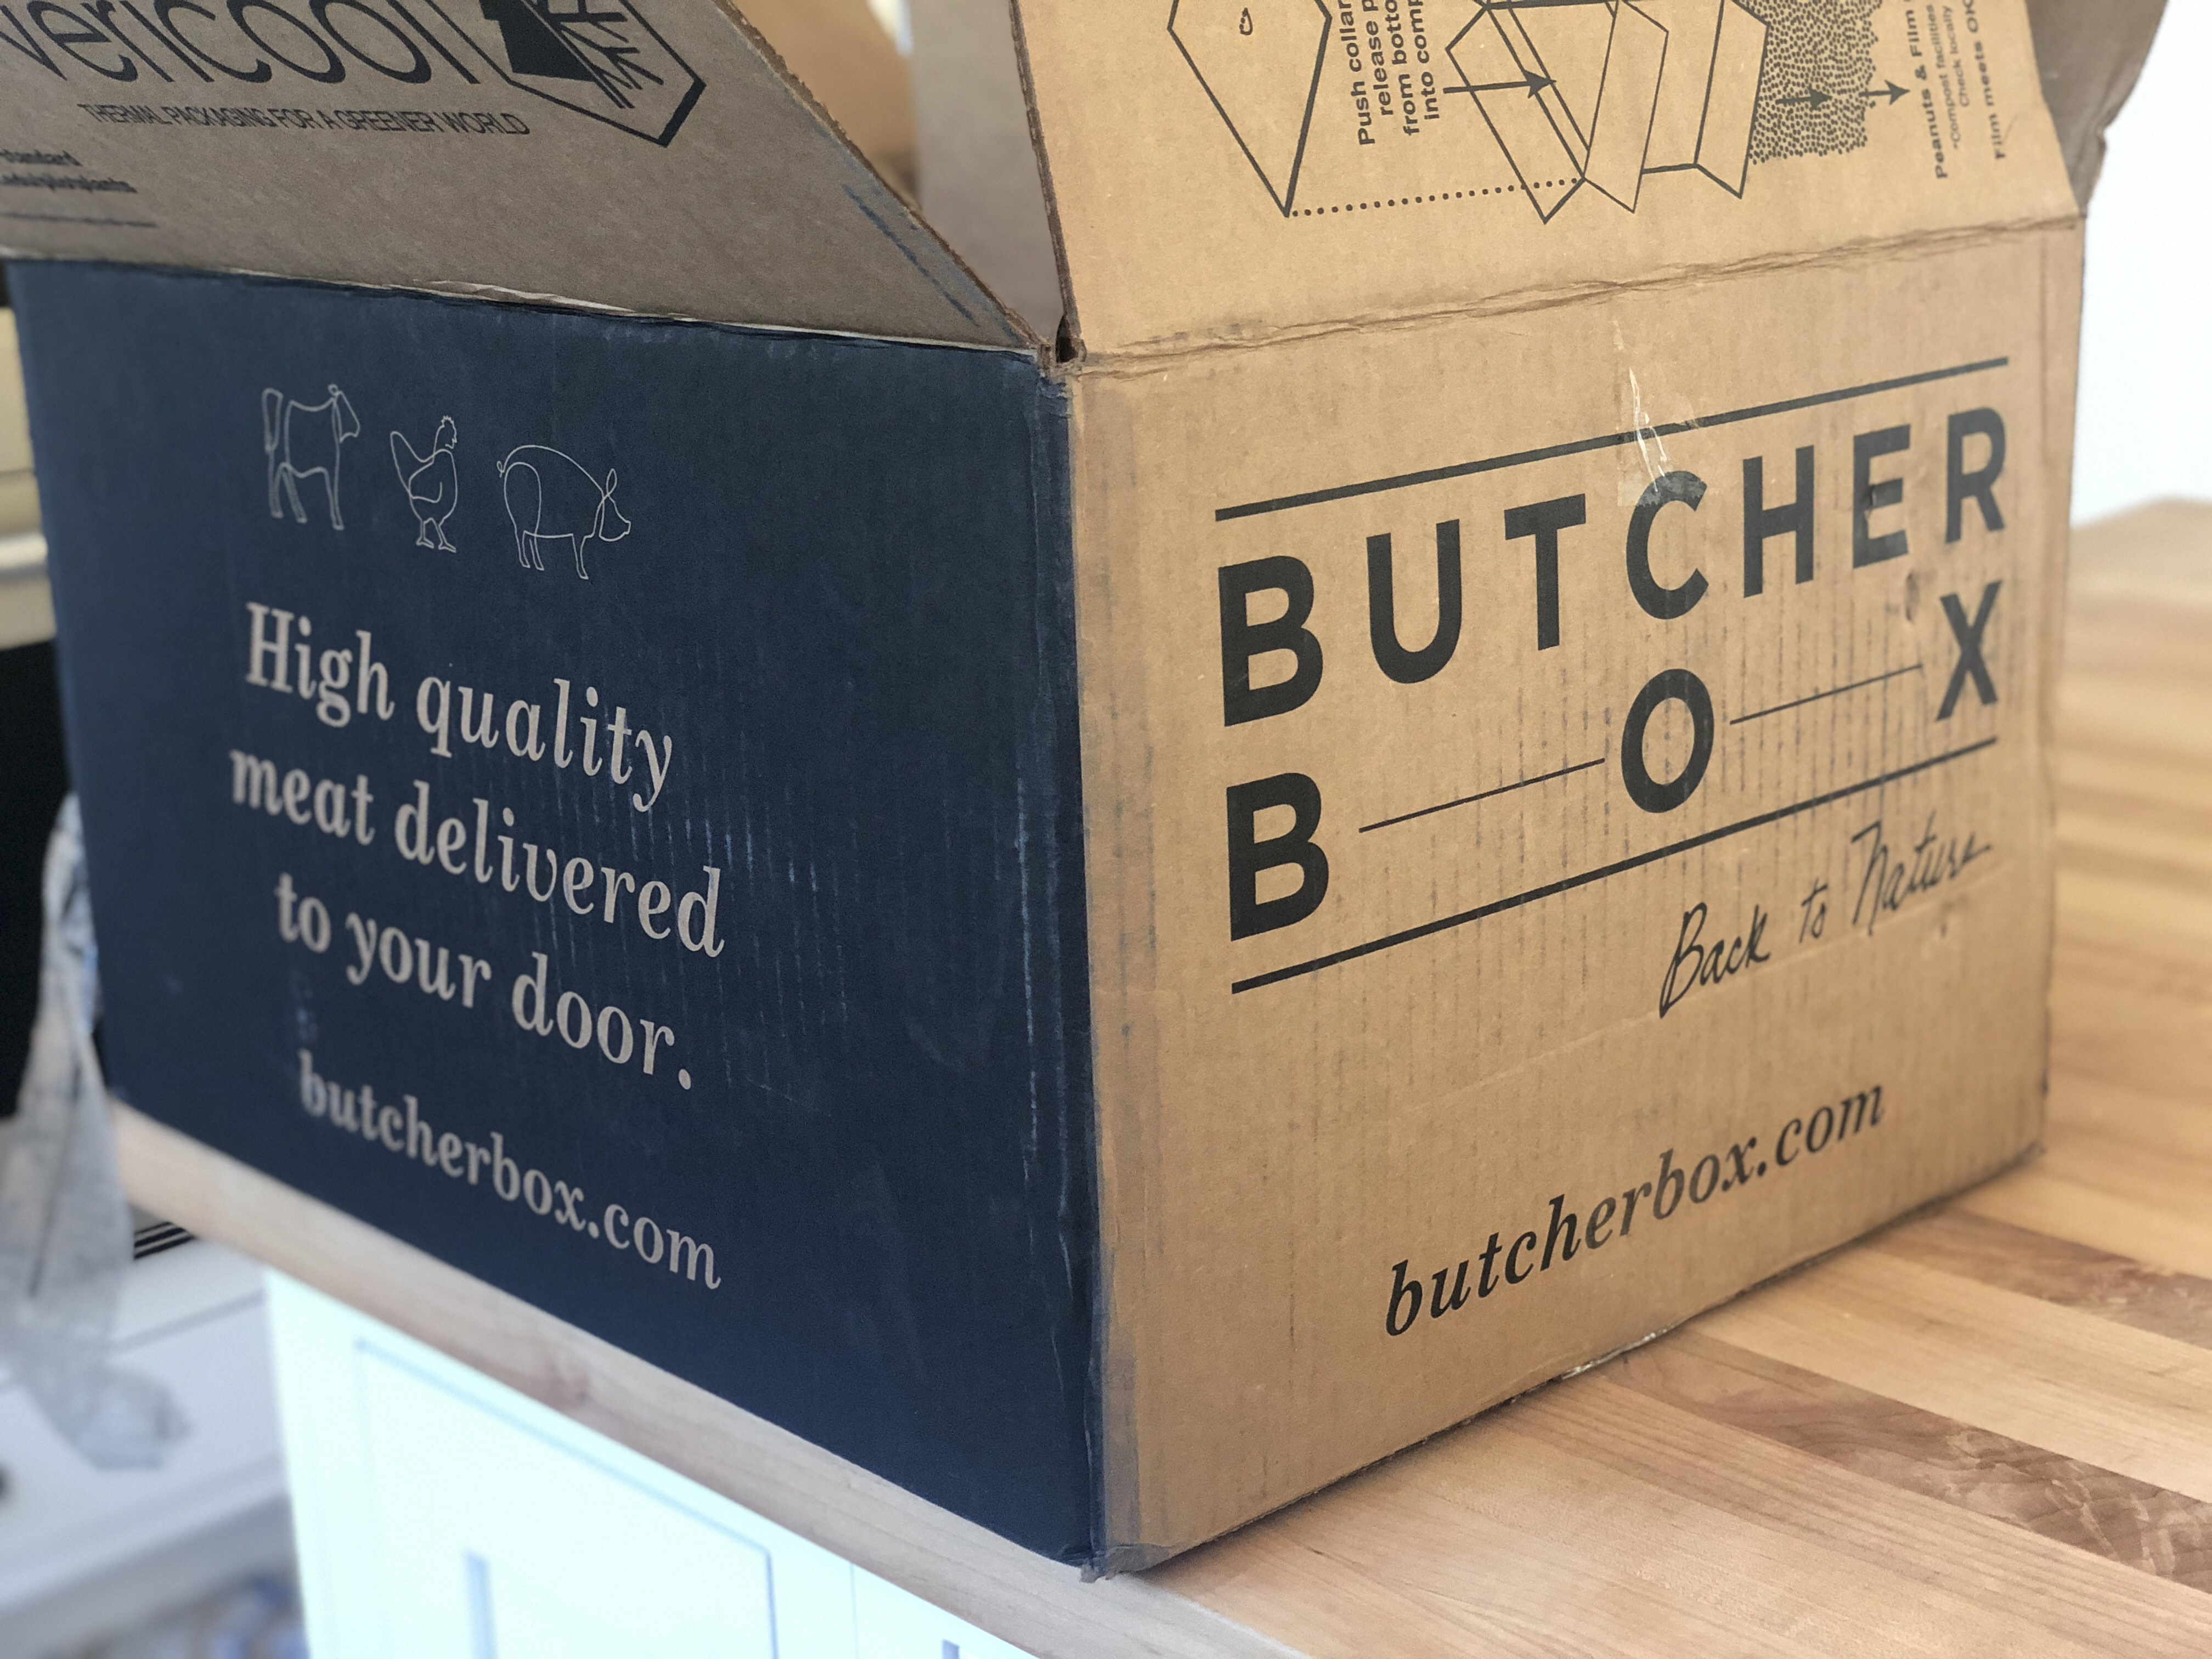 Butcher box meats delivered to your door